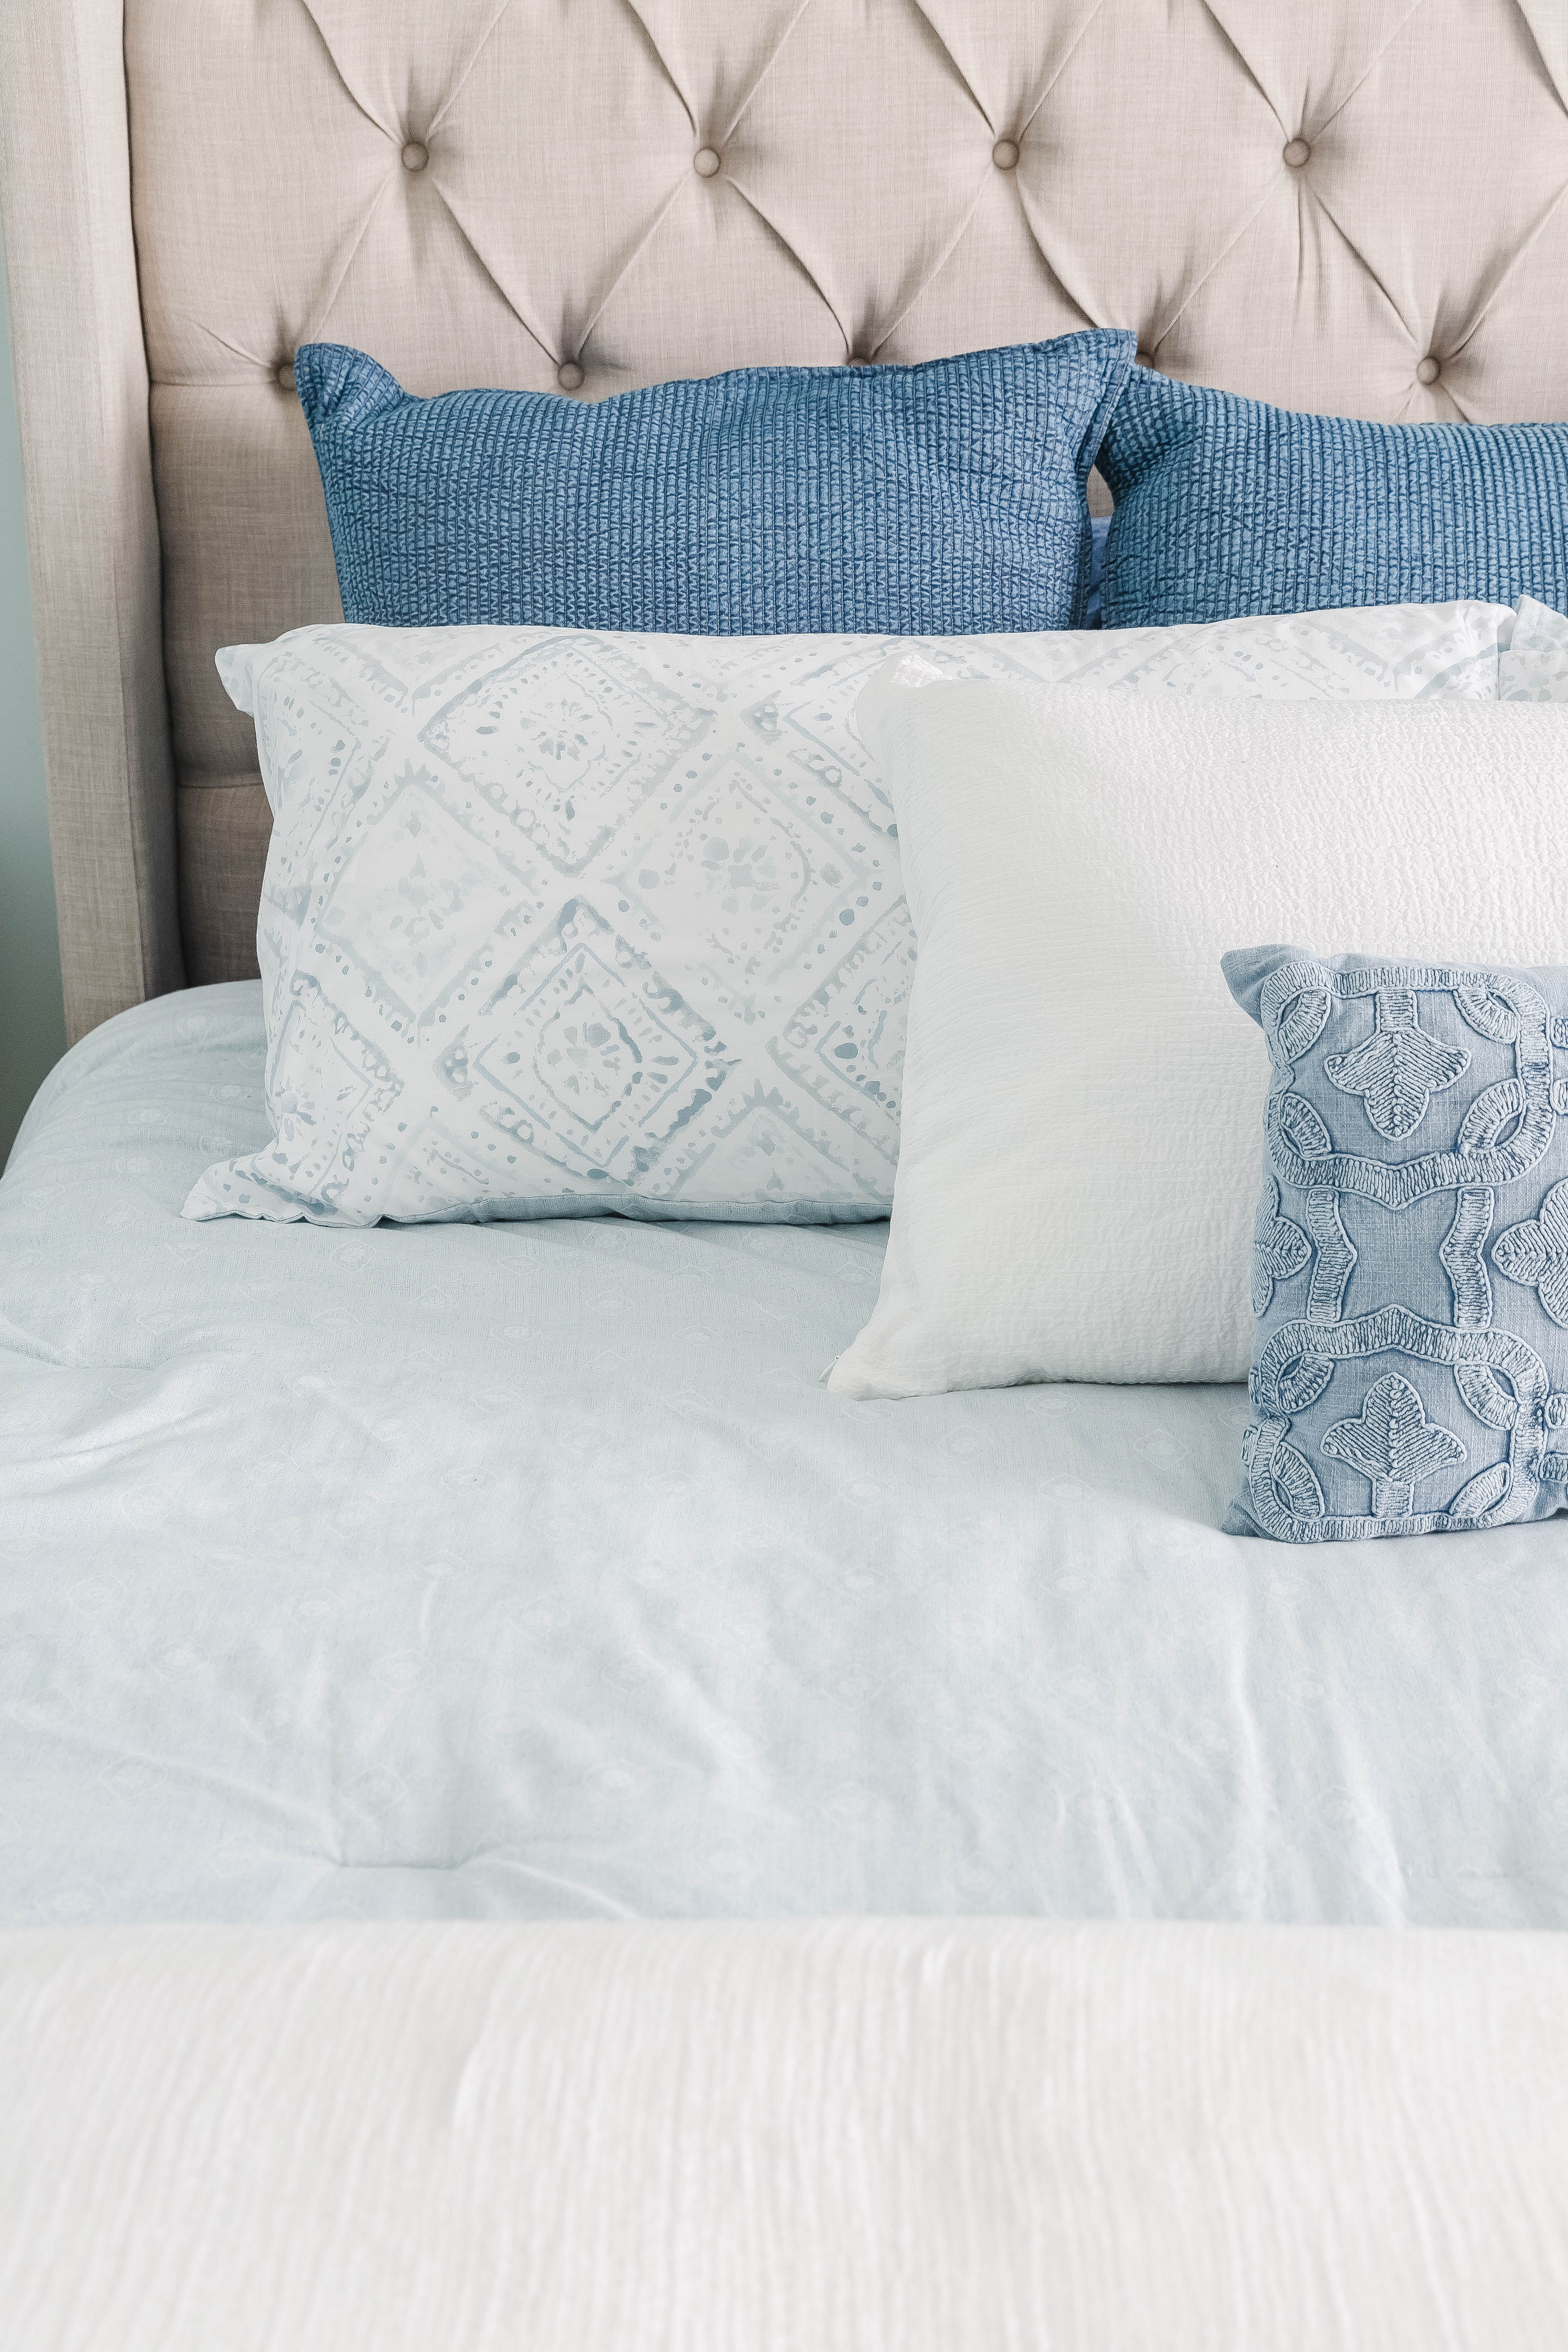 Modern Coastal Bedroom - Blue Pillows 